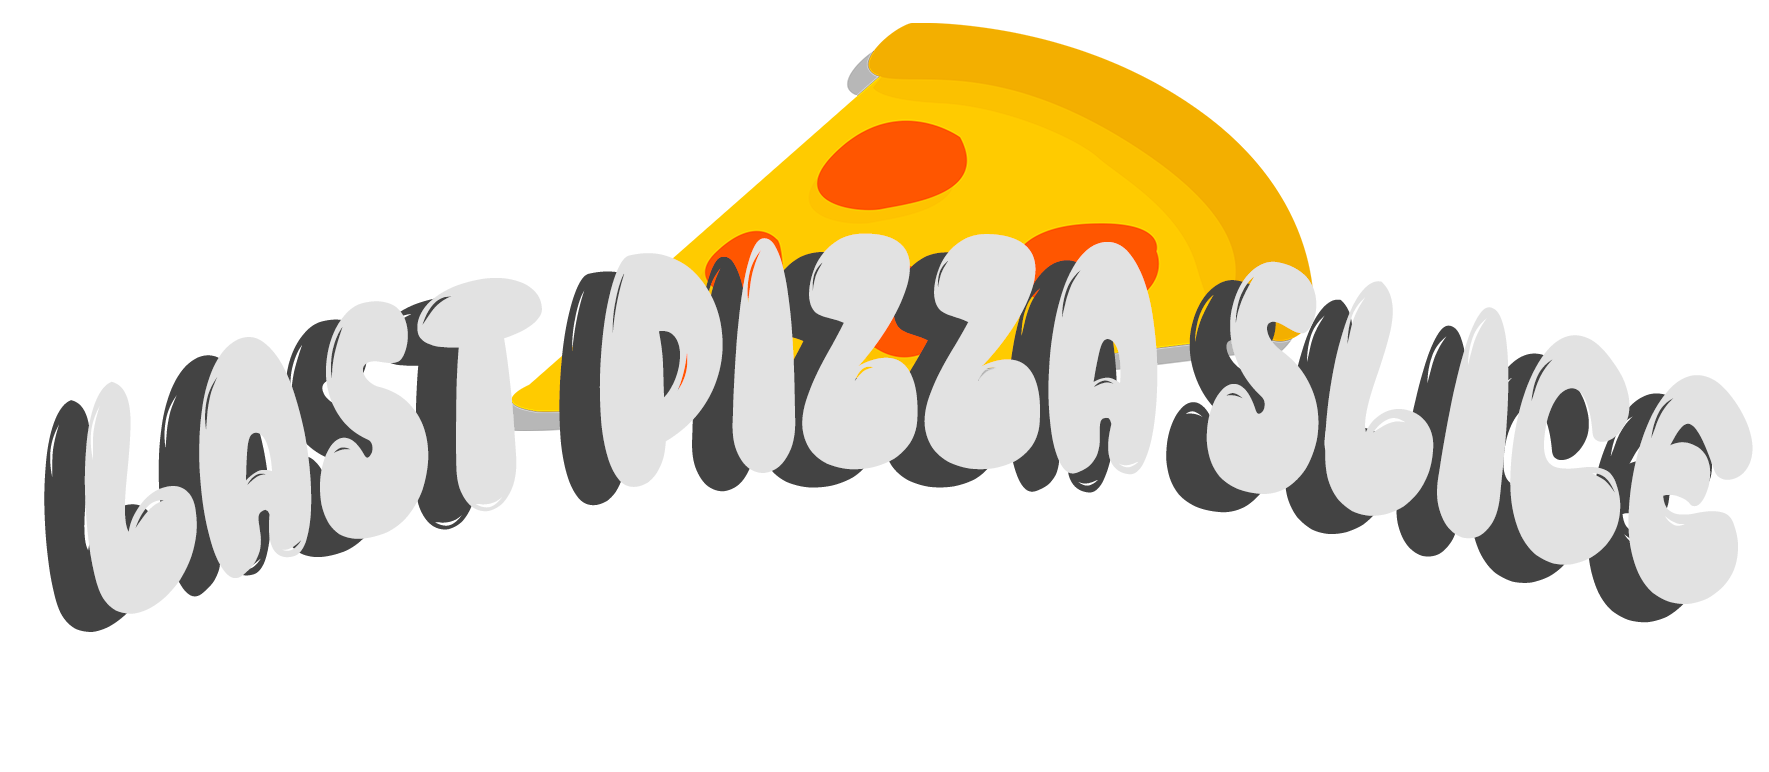 Last Pizza Slice